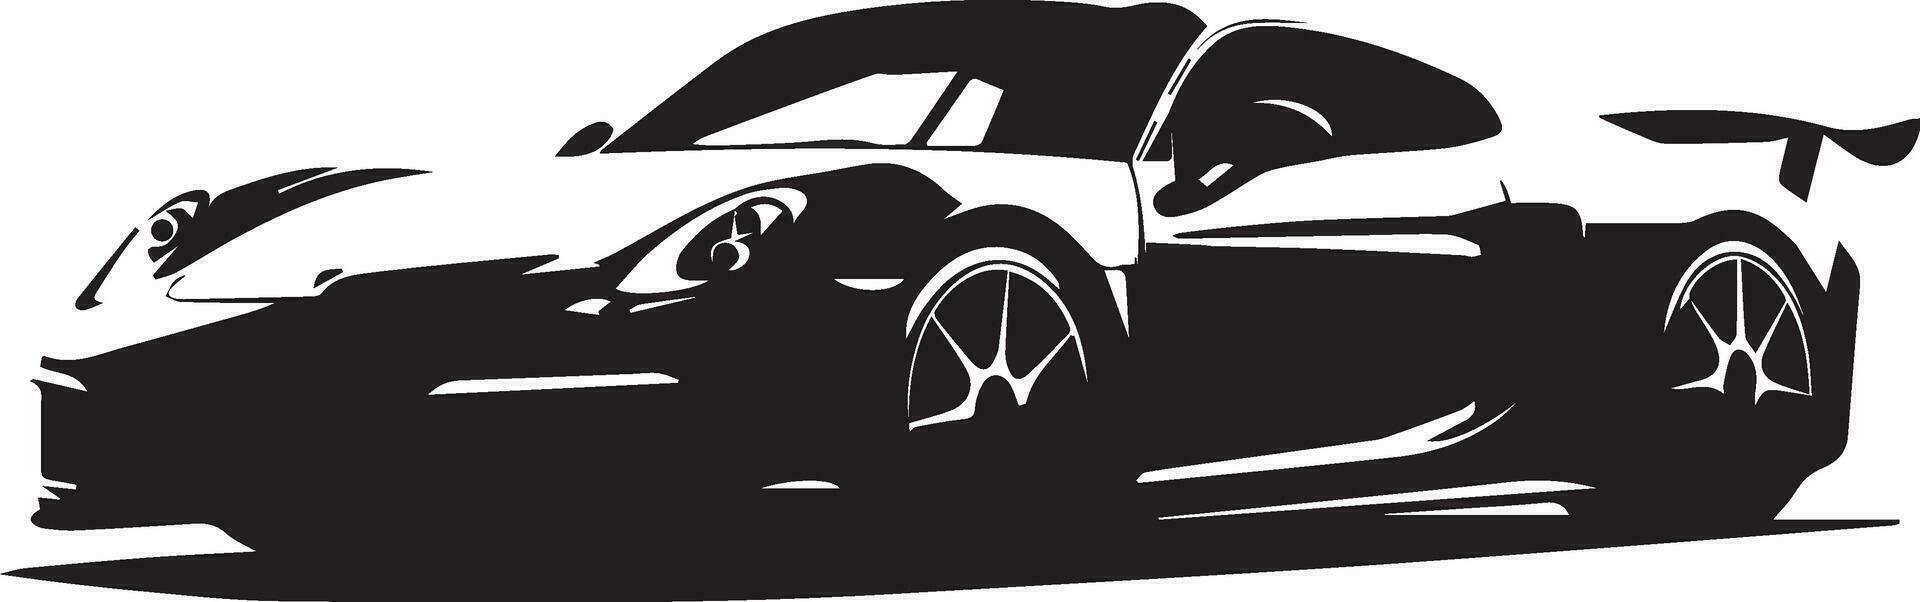 Car vector silhouette illustration black color 2